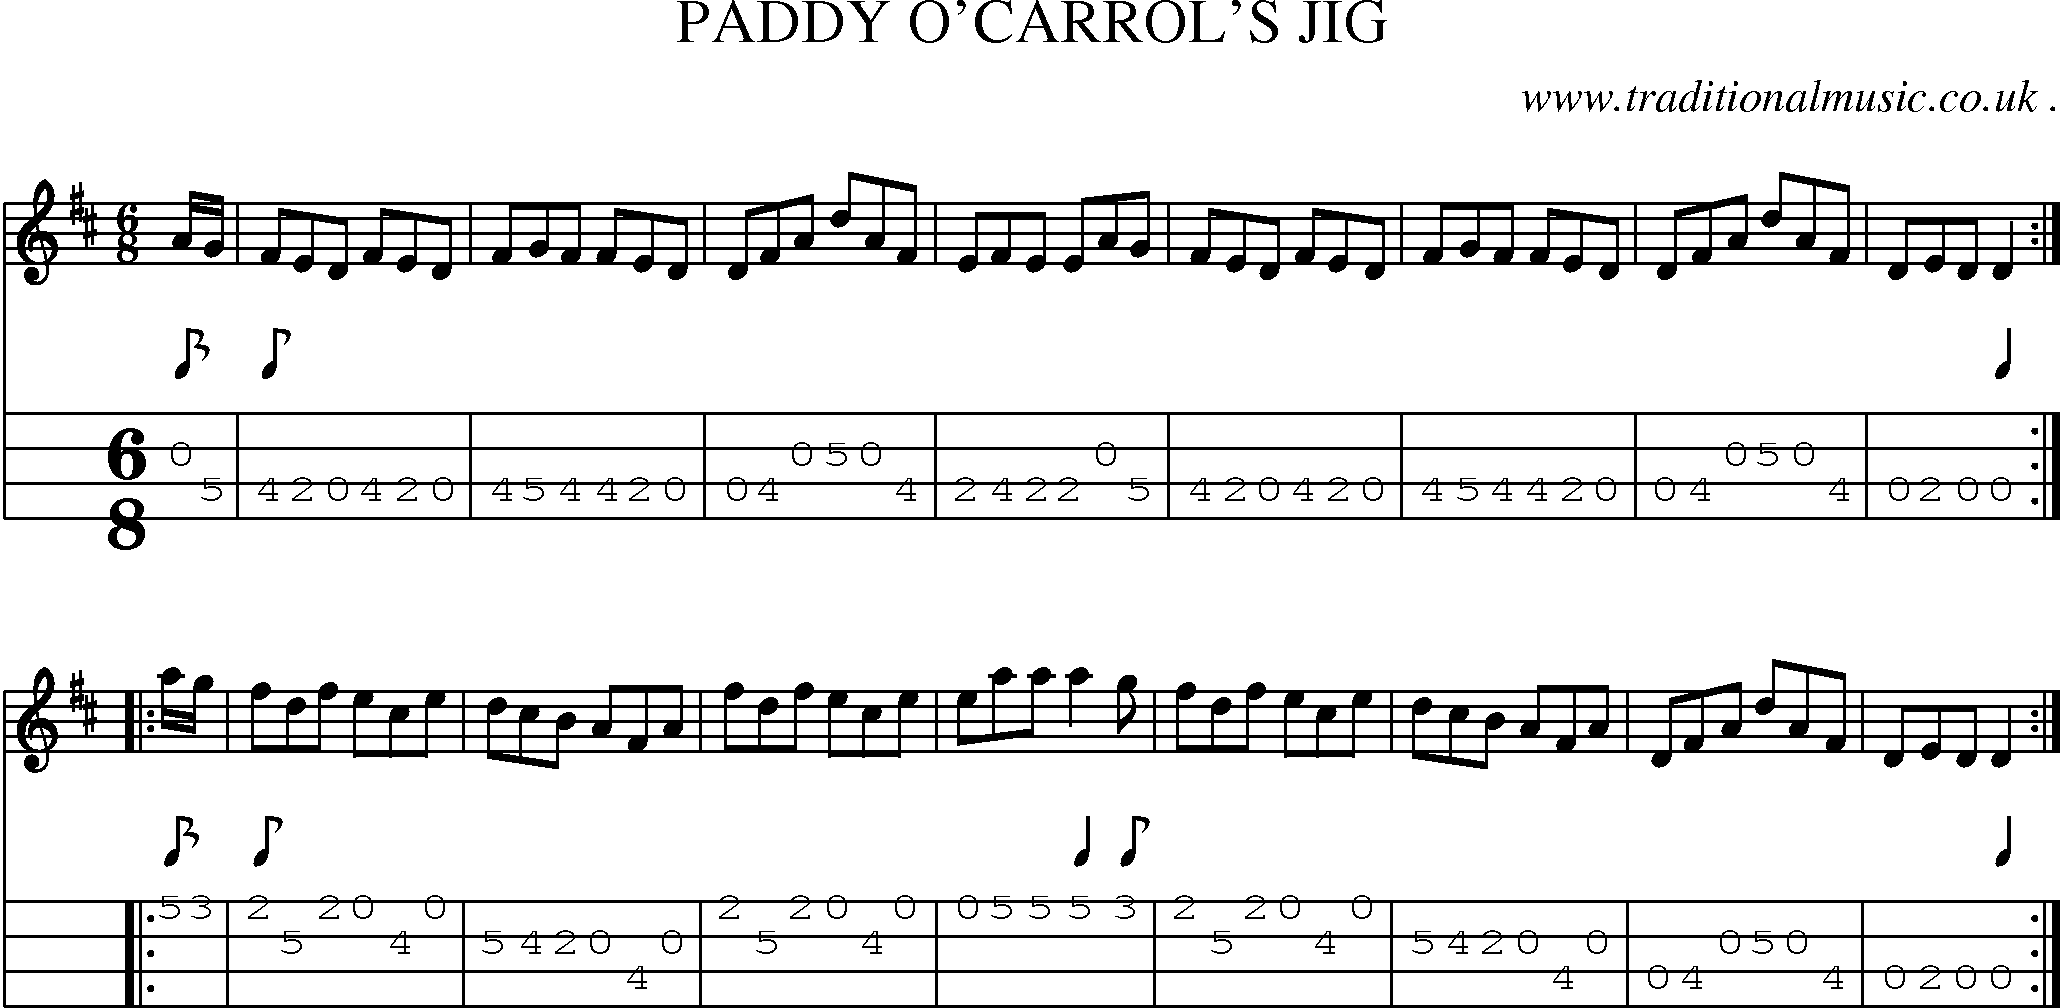 Sheet-Music and Mandolin Tabs for Paddy Ocarrols Jig